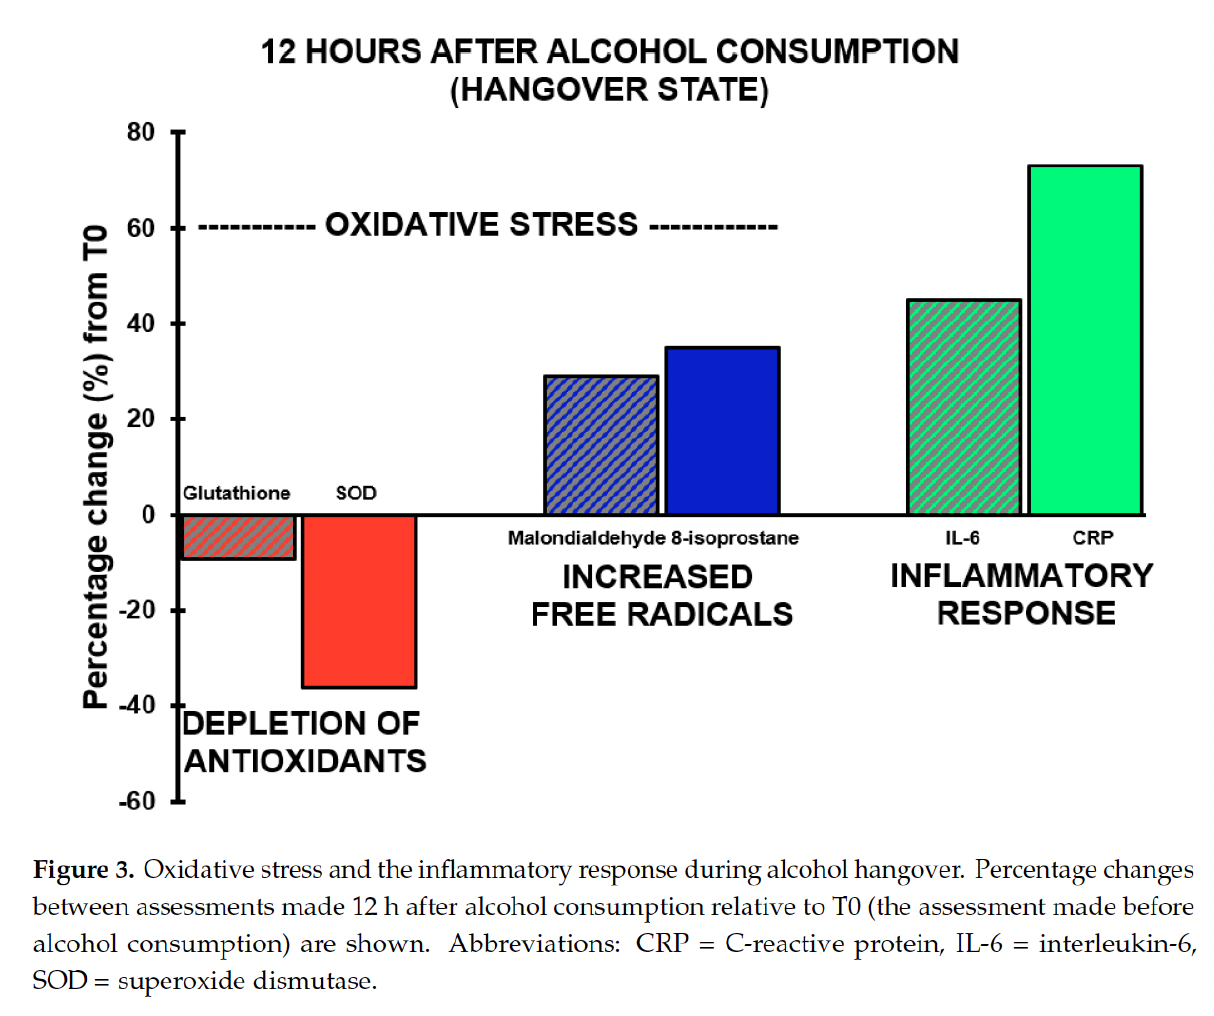 Oxidative stress and the inflammatory response during alcohol hangover. Credit: van de Loo AJAE, Mackus M, Kwon O, Krishnakumar IM, Garssen J, Kraneveld AD, Scholey A, Verster JC. The Inflammatory Response to Alcohol Consumption and Its Role in the Pathology of Alcohol Hangover. J Clin Med. 2020 Jul 2;9(7):2081. doi: 10.3390/jcm9072081. PMID: 32630717; PMCID: PMC7408936.